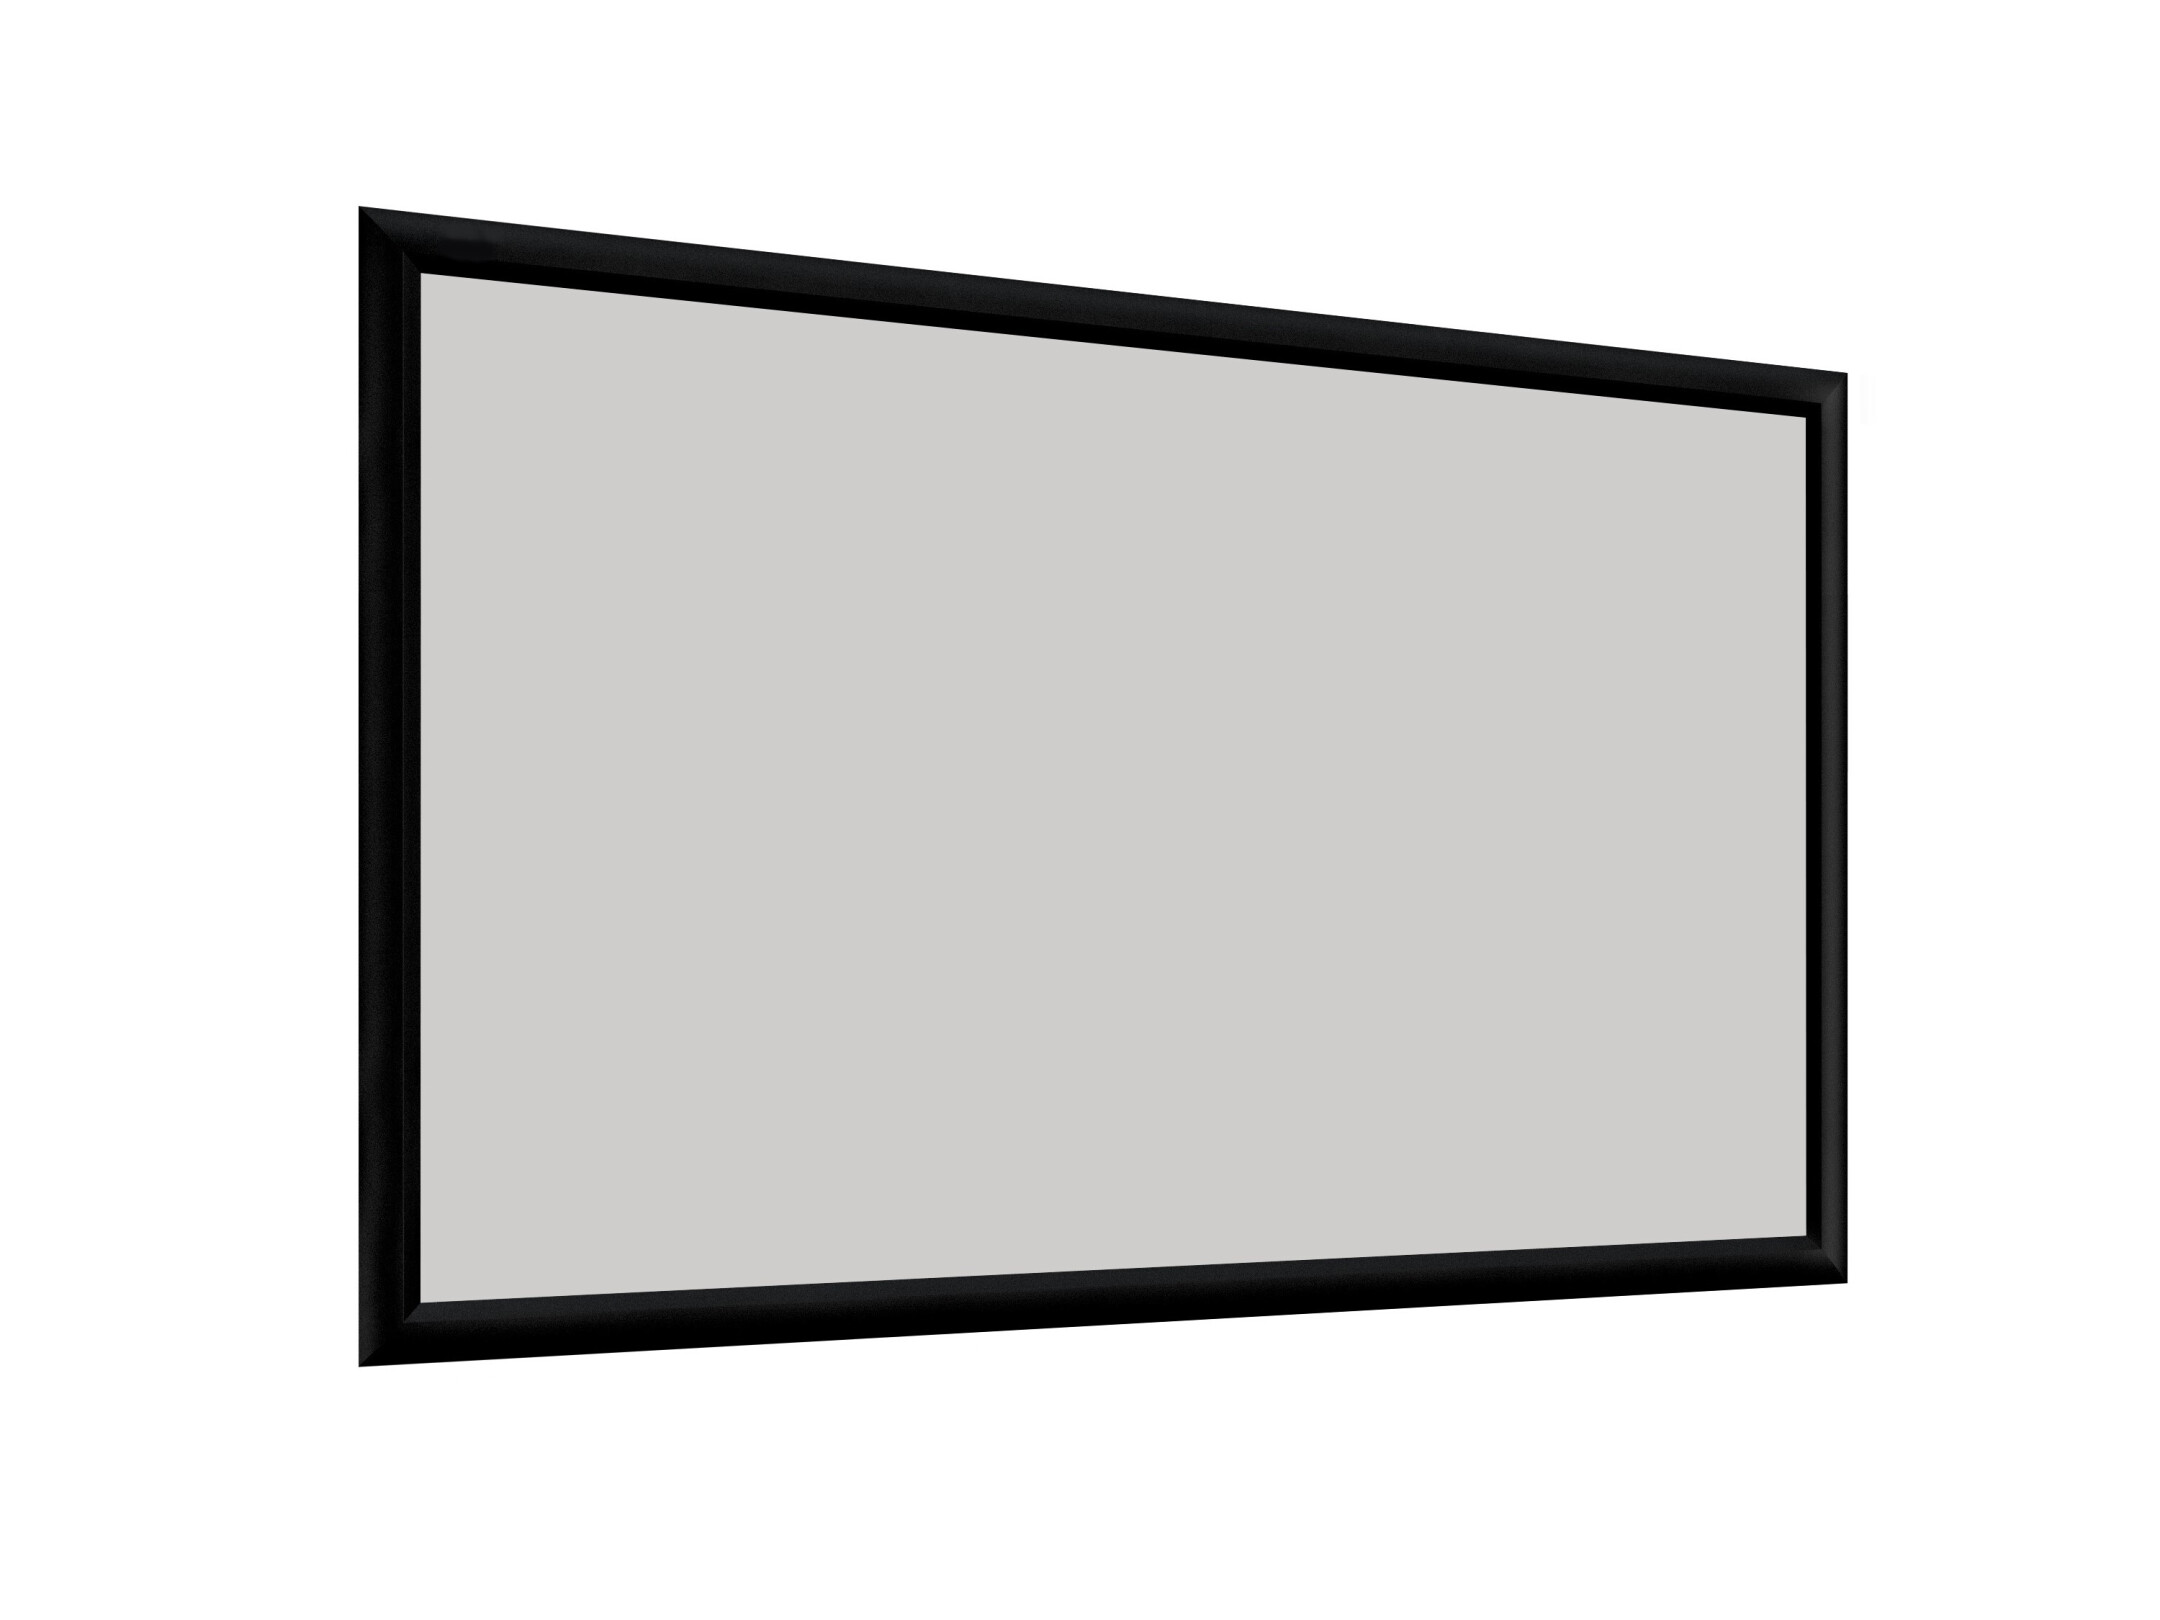 DELUXX-Cinema-Hoogcontrast-frame-projectiescherm-300-x-169-cm-135-DAYVISION-ALR